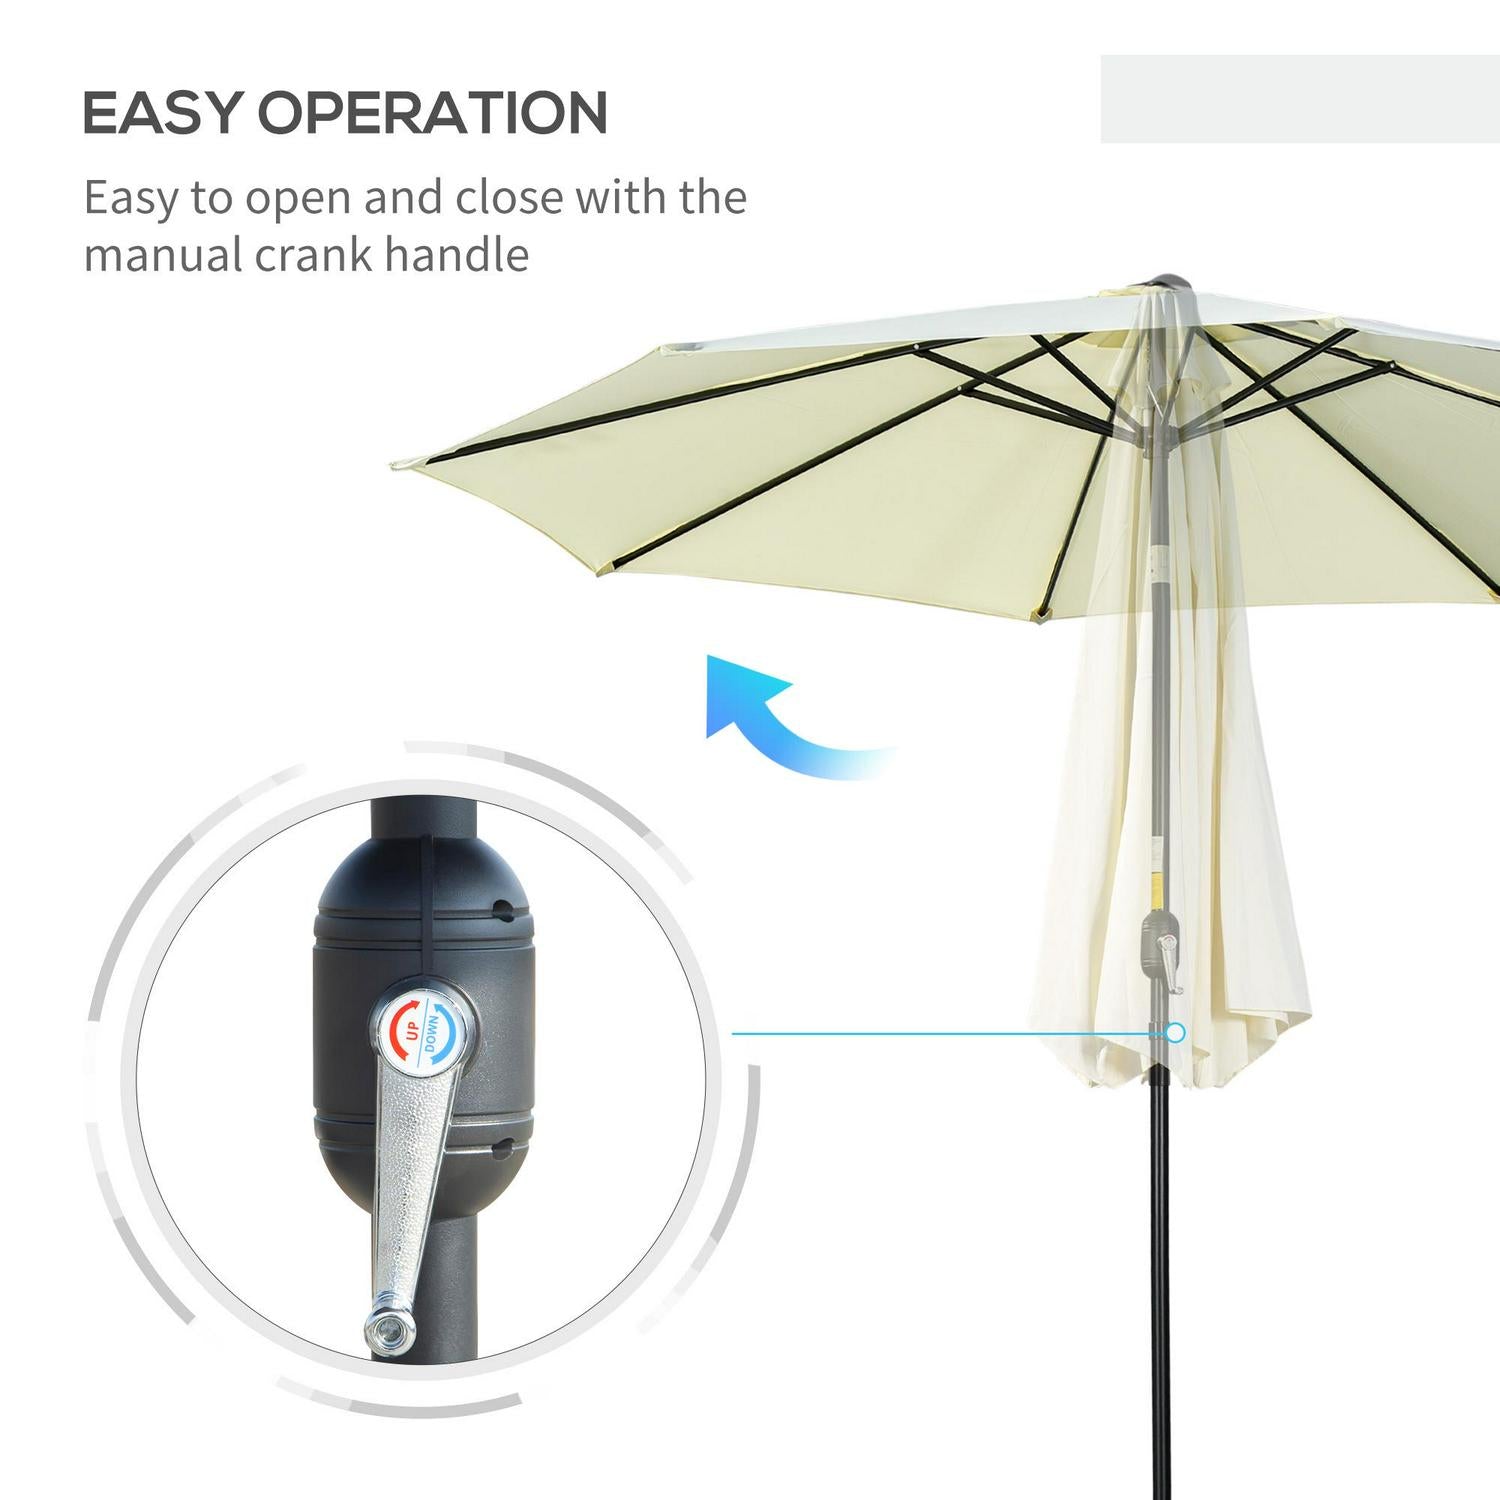 Tilting Parasol Garden Umbrellas- Beige